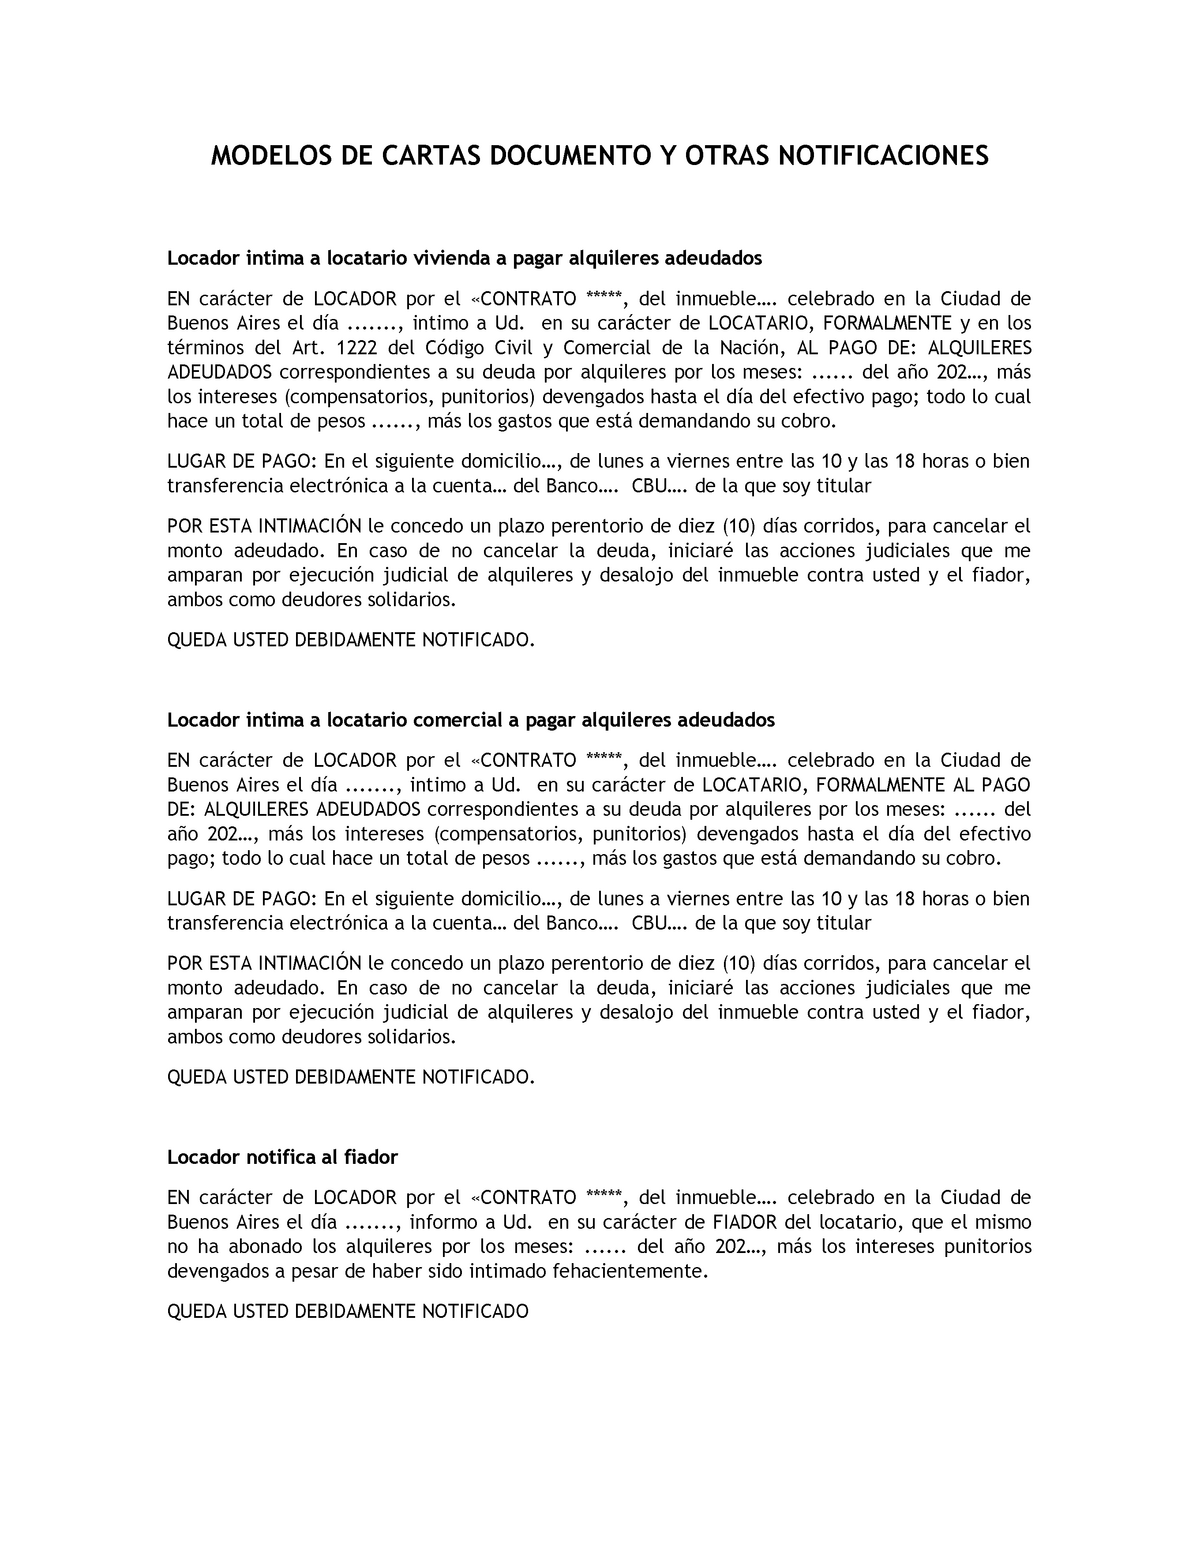 Modelos cartas documento otrasnotificaciones 2 - MODELOS DE CARTAS DOCUMENTO  Y OTRAS NOTIFICACIONES - Studocu